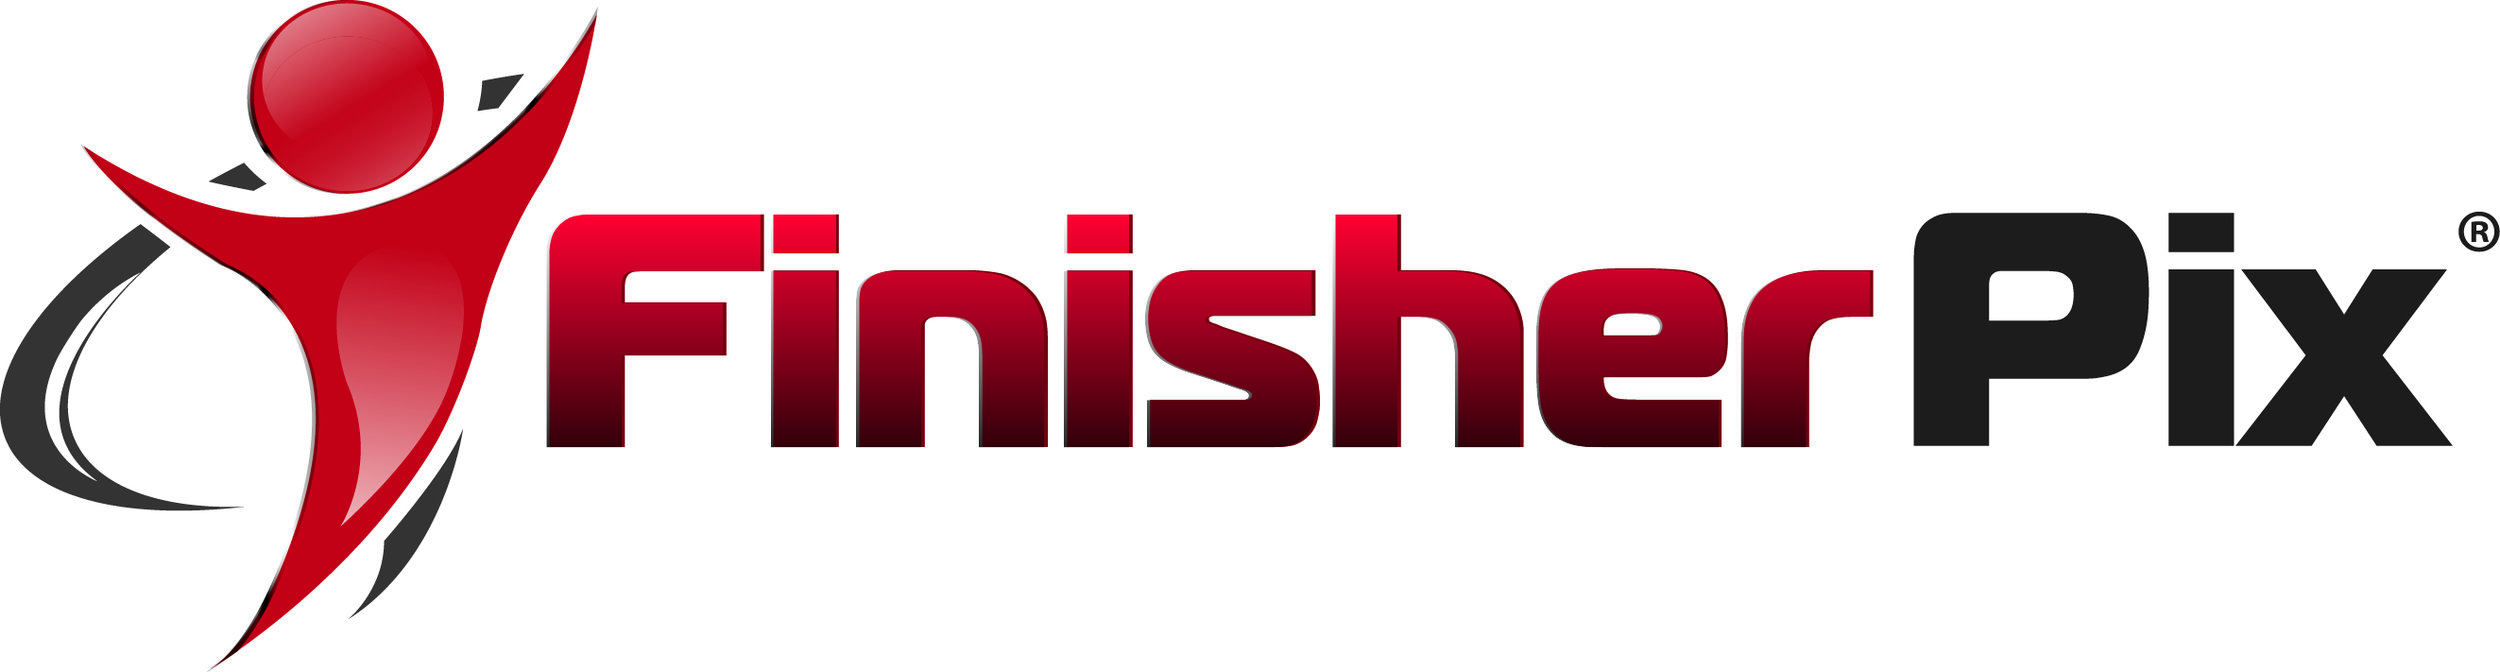 FinisherPix-logo.jpg